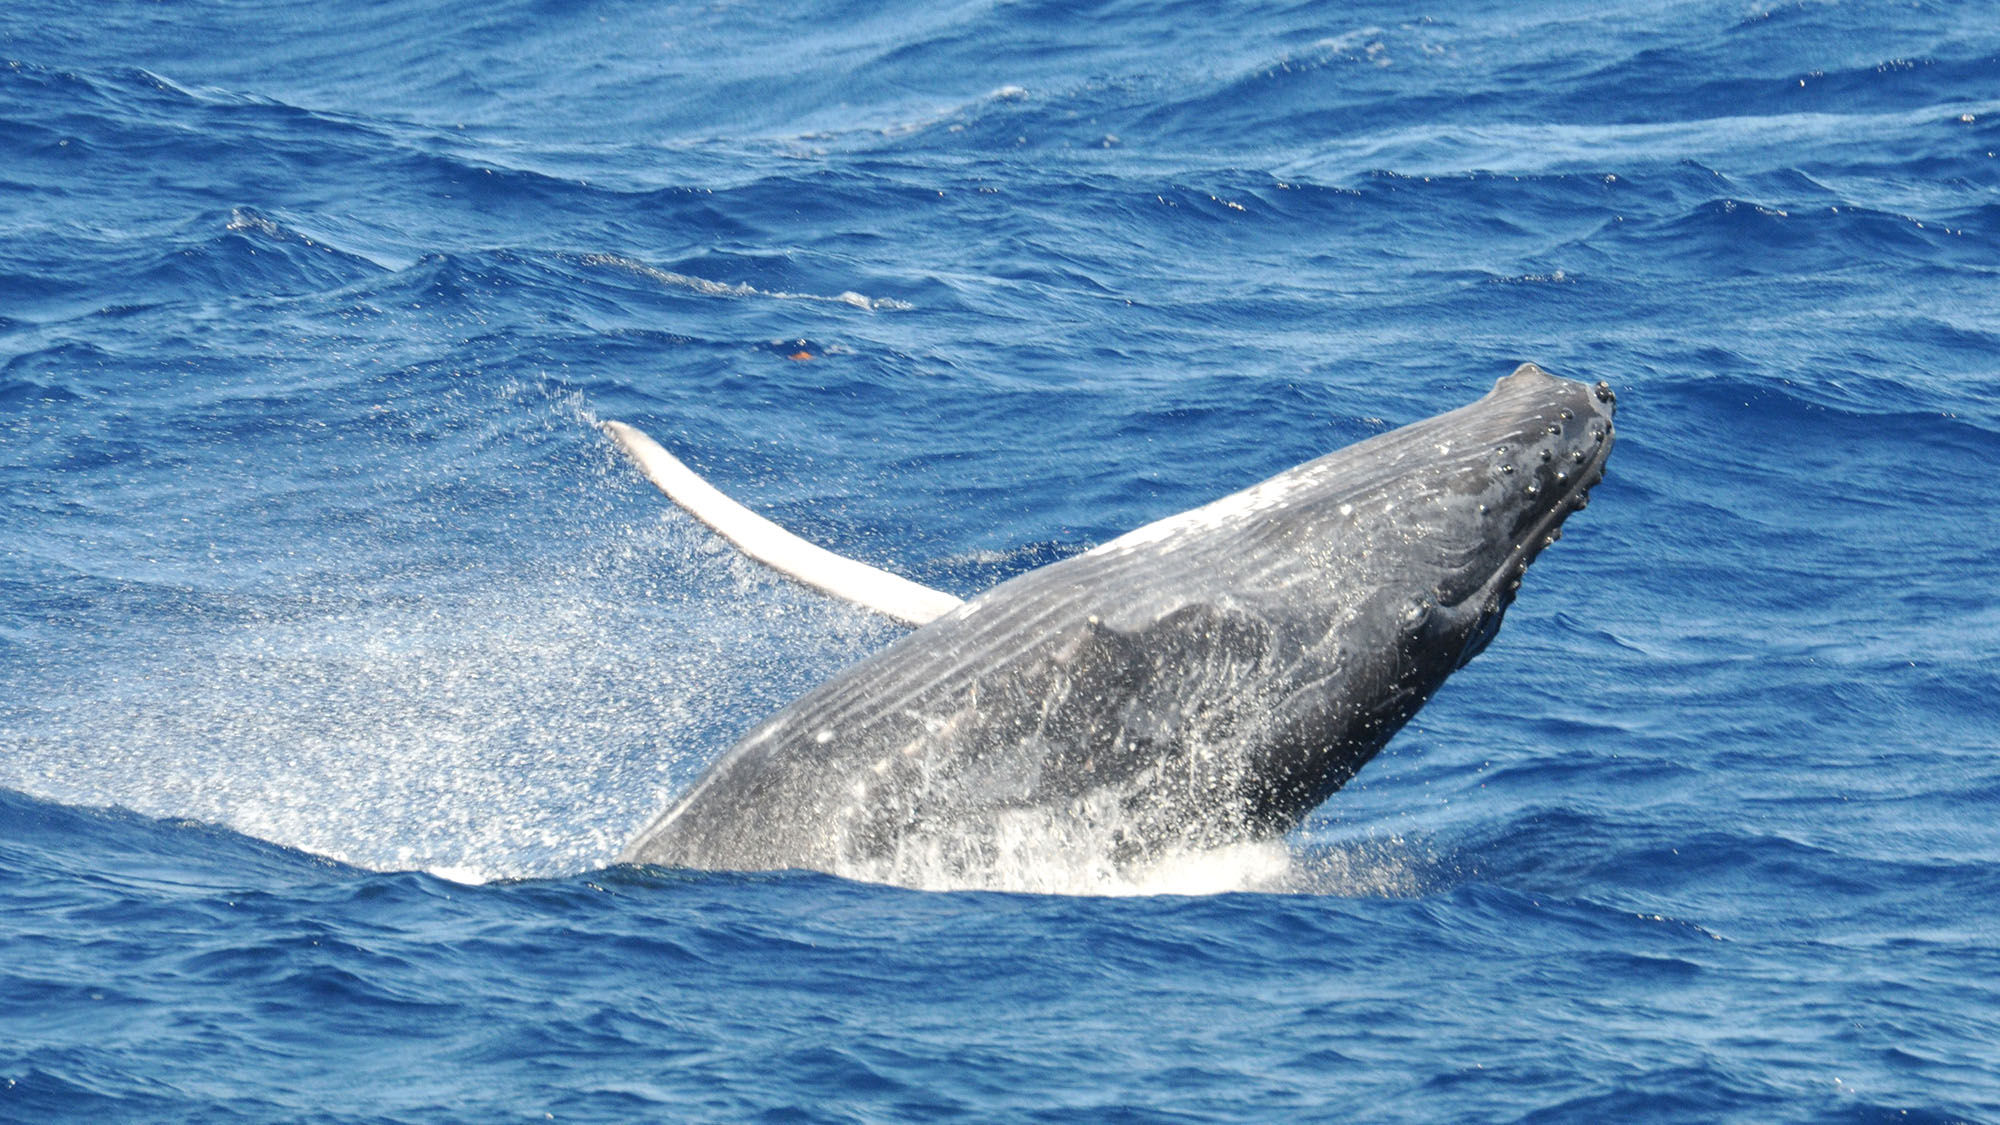 Winter whale-watching returns to Baja California Sur